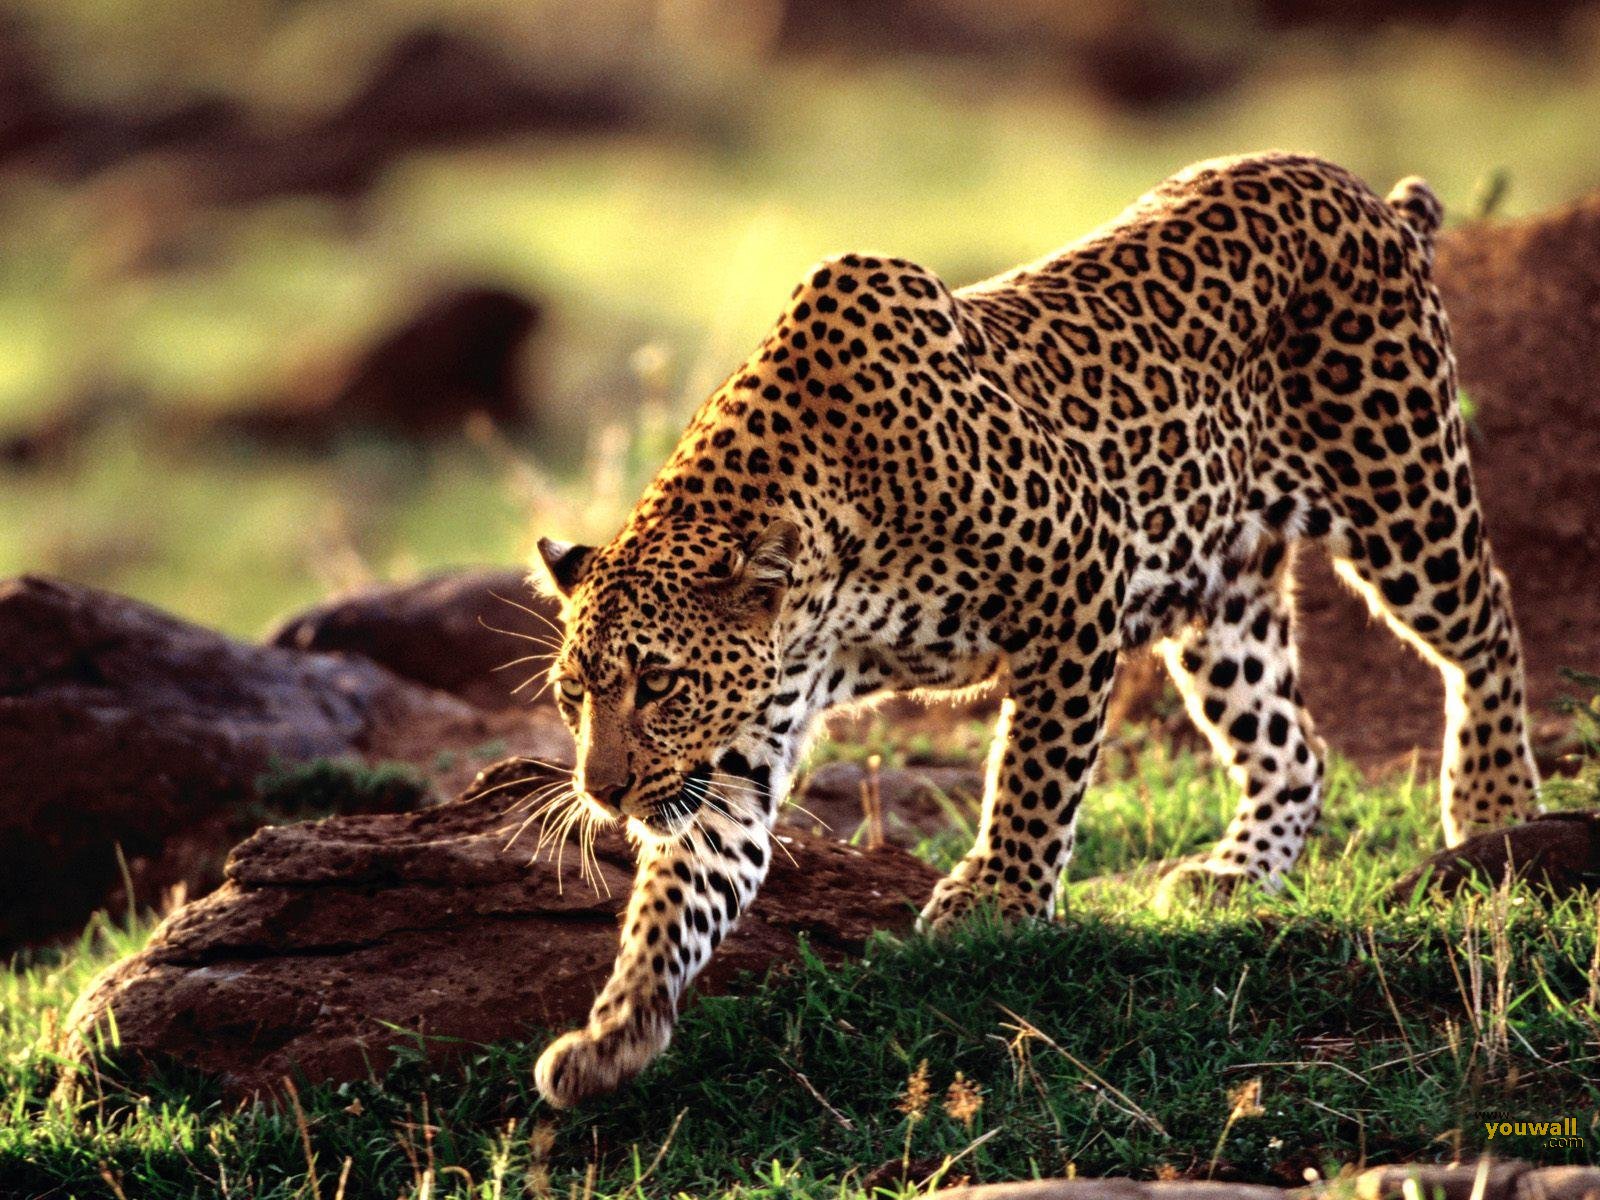  2010 filed under cheetah tagged animal wallpapers cheetah wallpapers